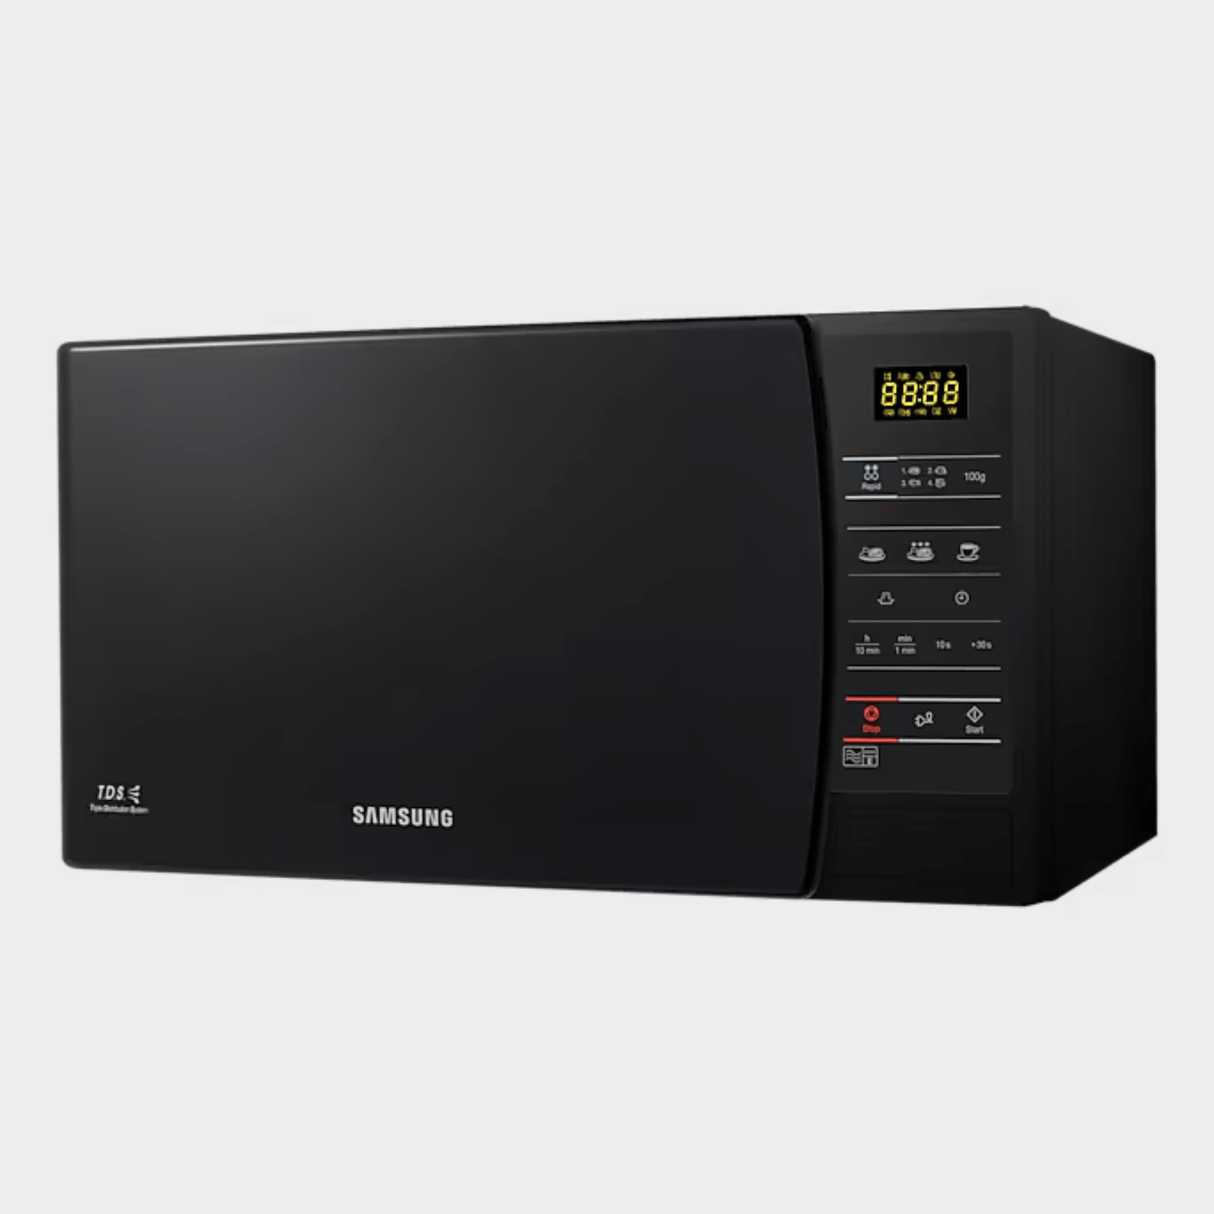 Samsung 20L Solo Microwave Oven with Ceramic inside, ME731K-B/EU